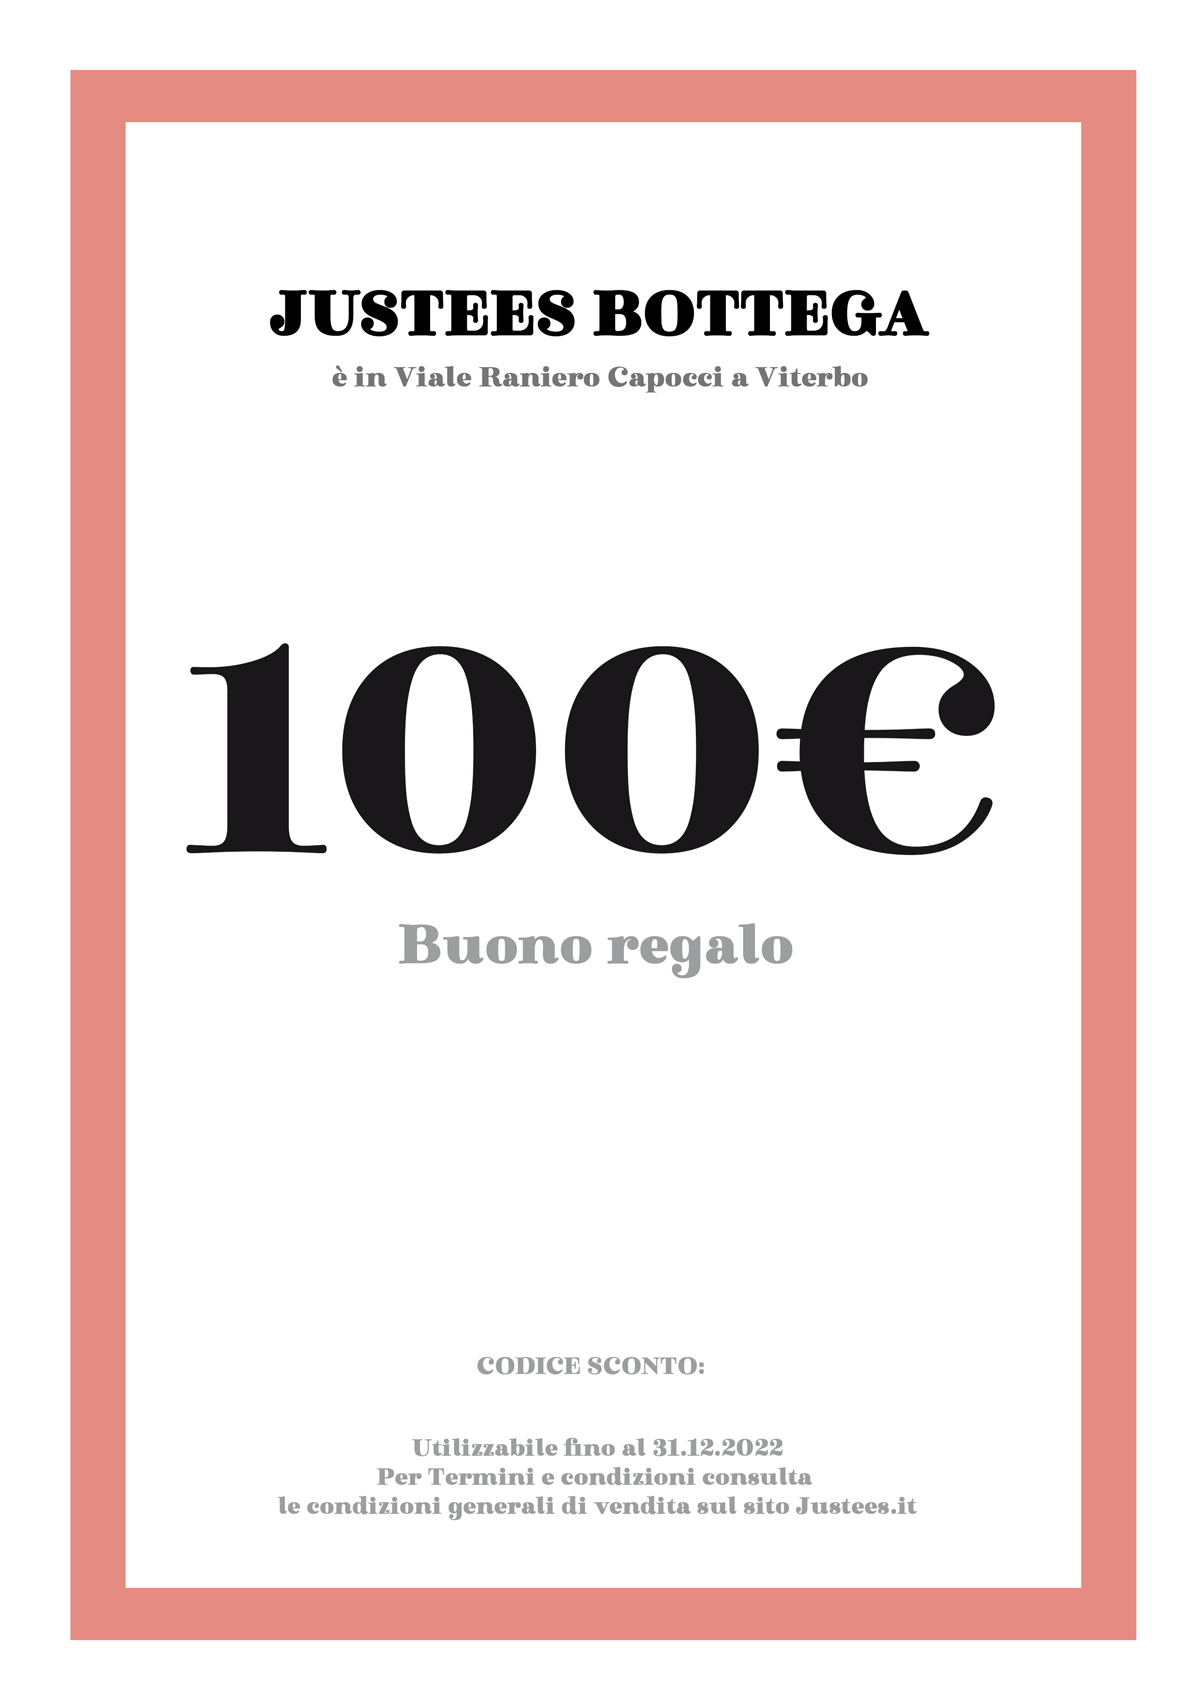 Gift card 100 €